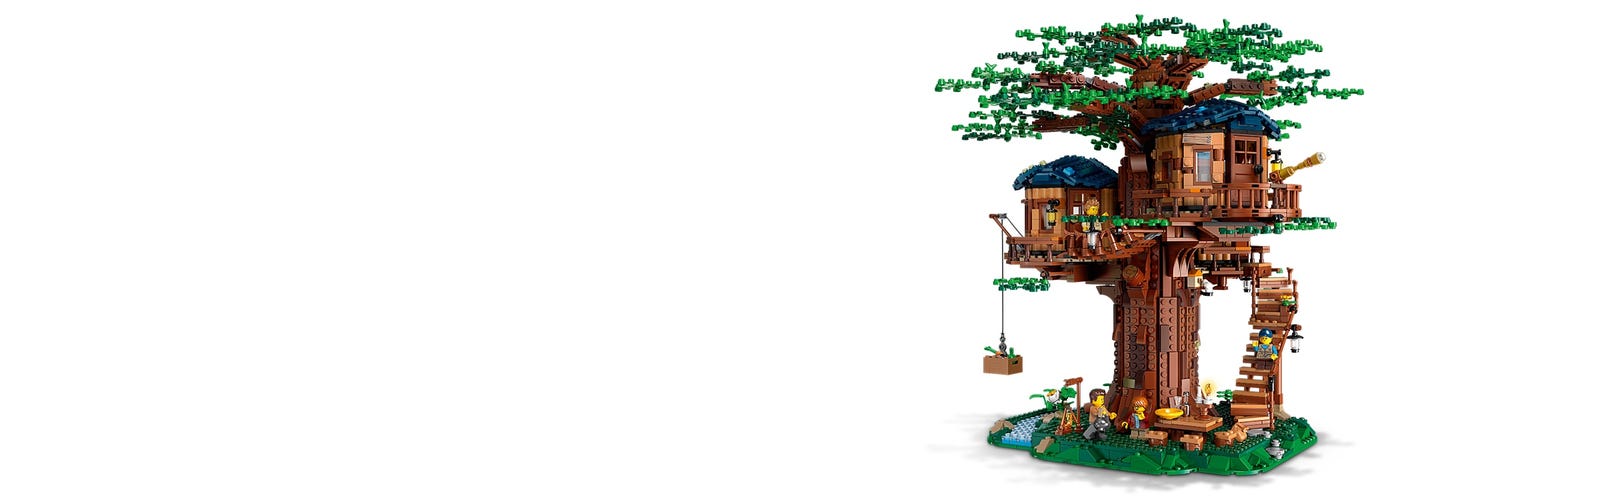 Elektricien betrouwbaarheid Mechanica Tree House 21318 | Ideas | Buy online at the Official LEGO® Shop US